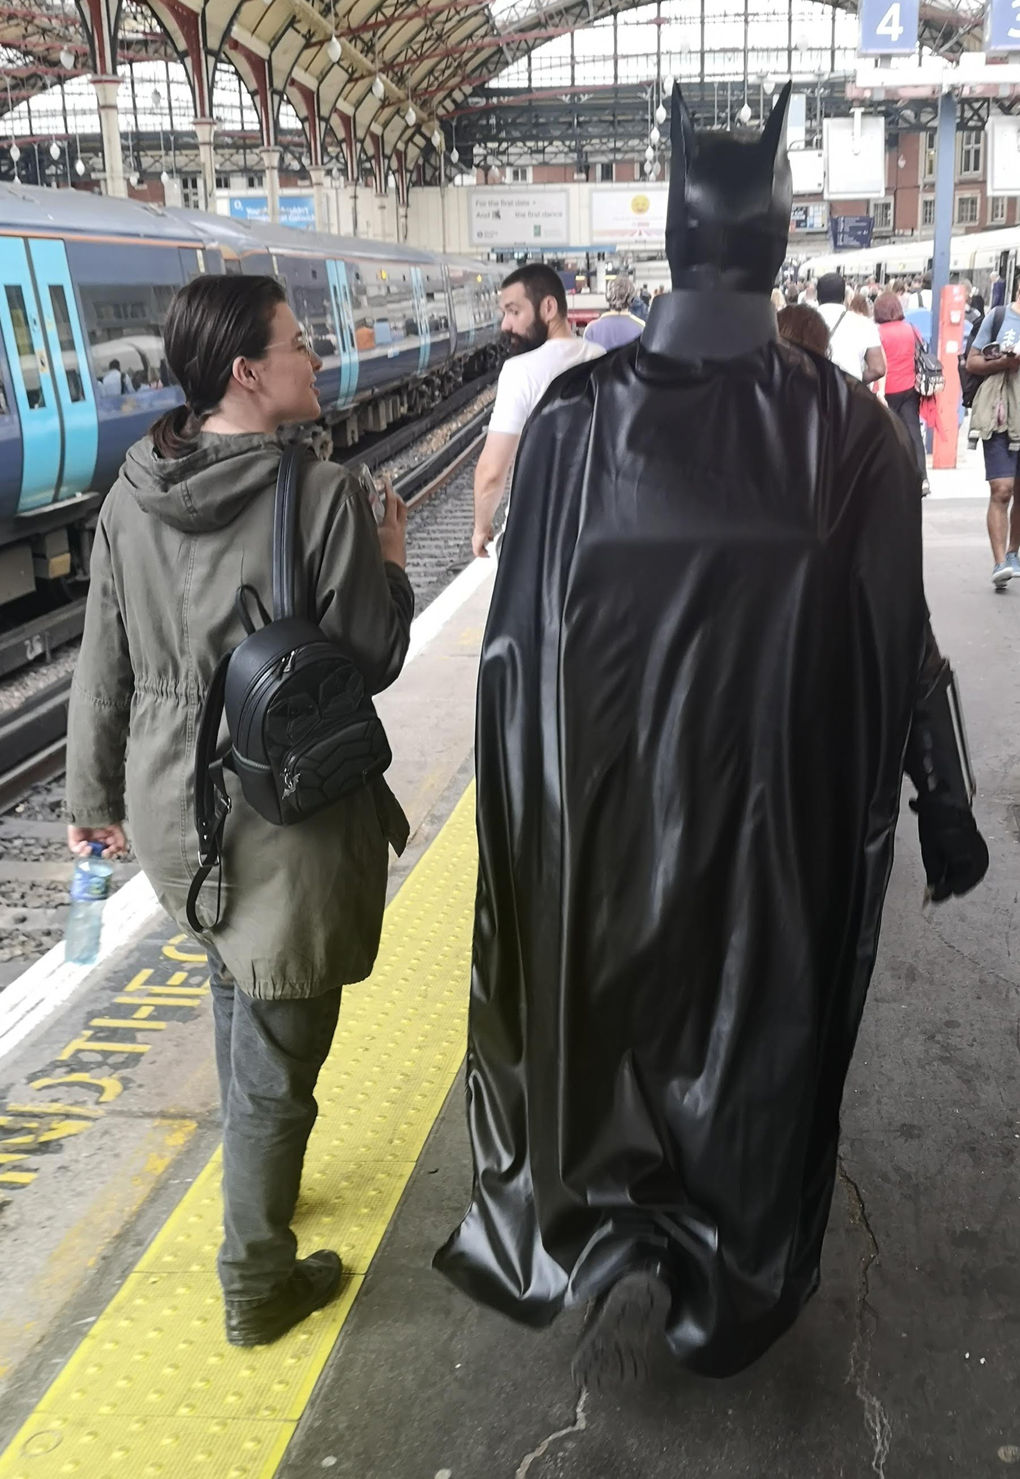 Batman walking down a train platform